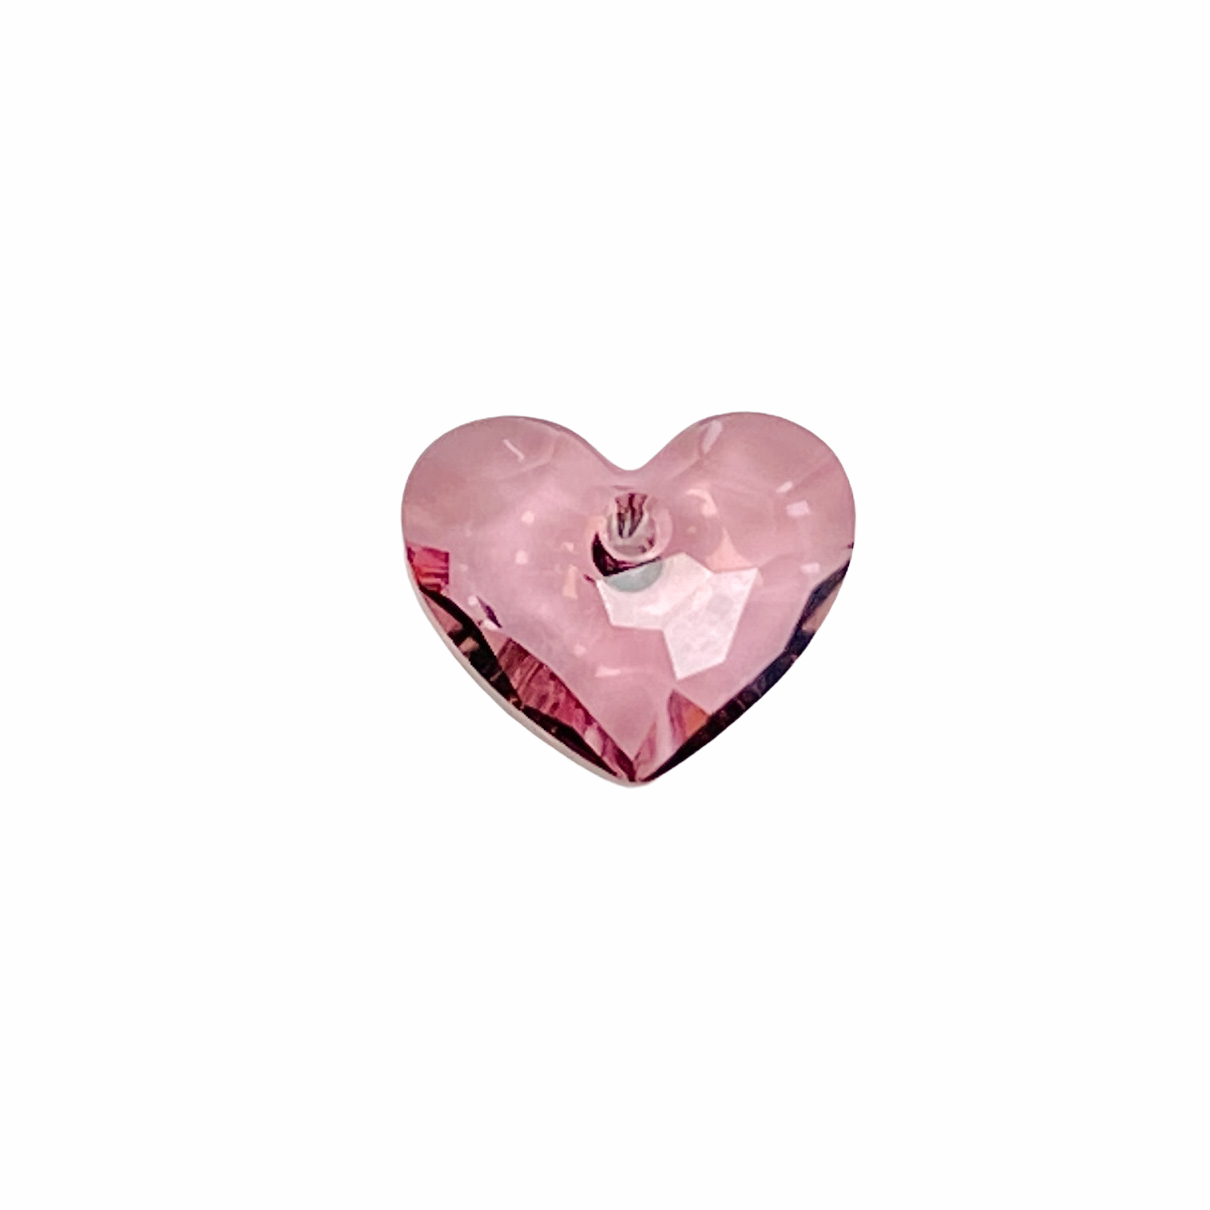 18mm Swarovski Crystal - Truly In Love Heart (1 pc.)